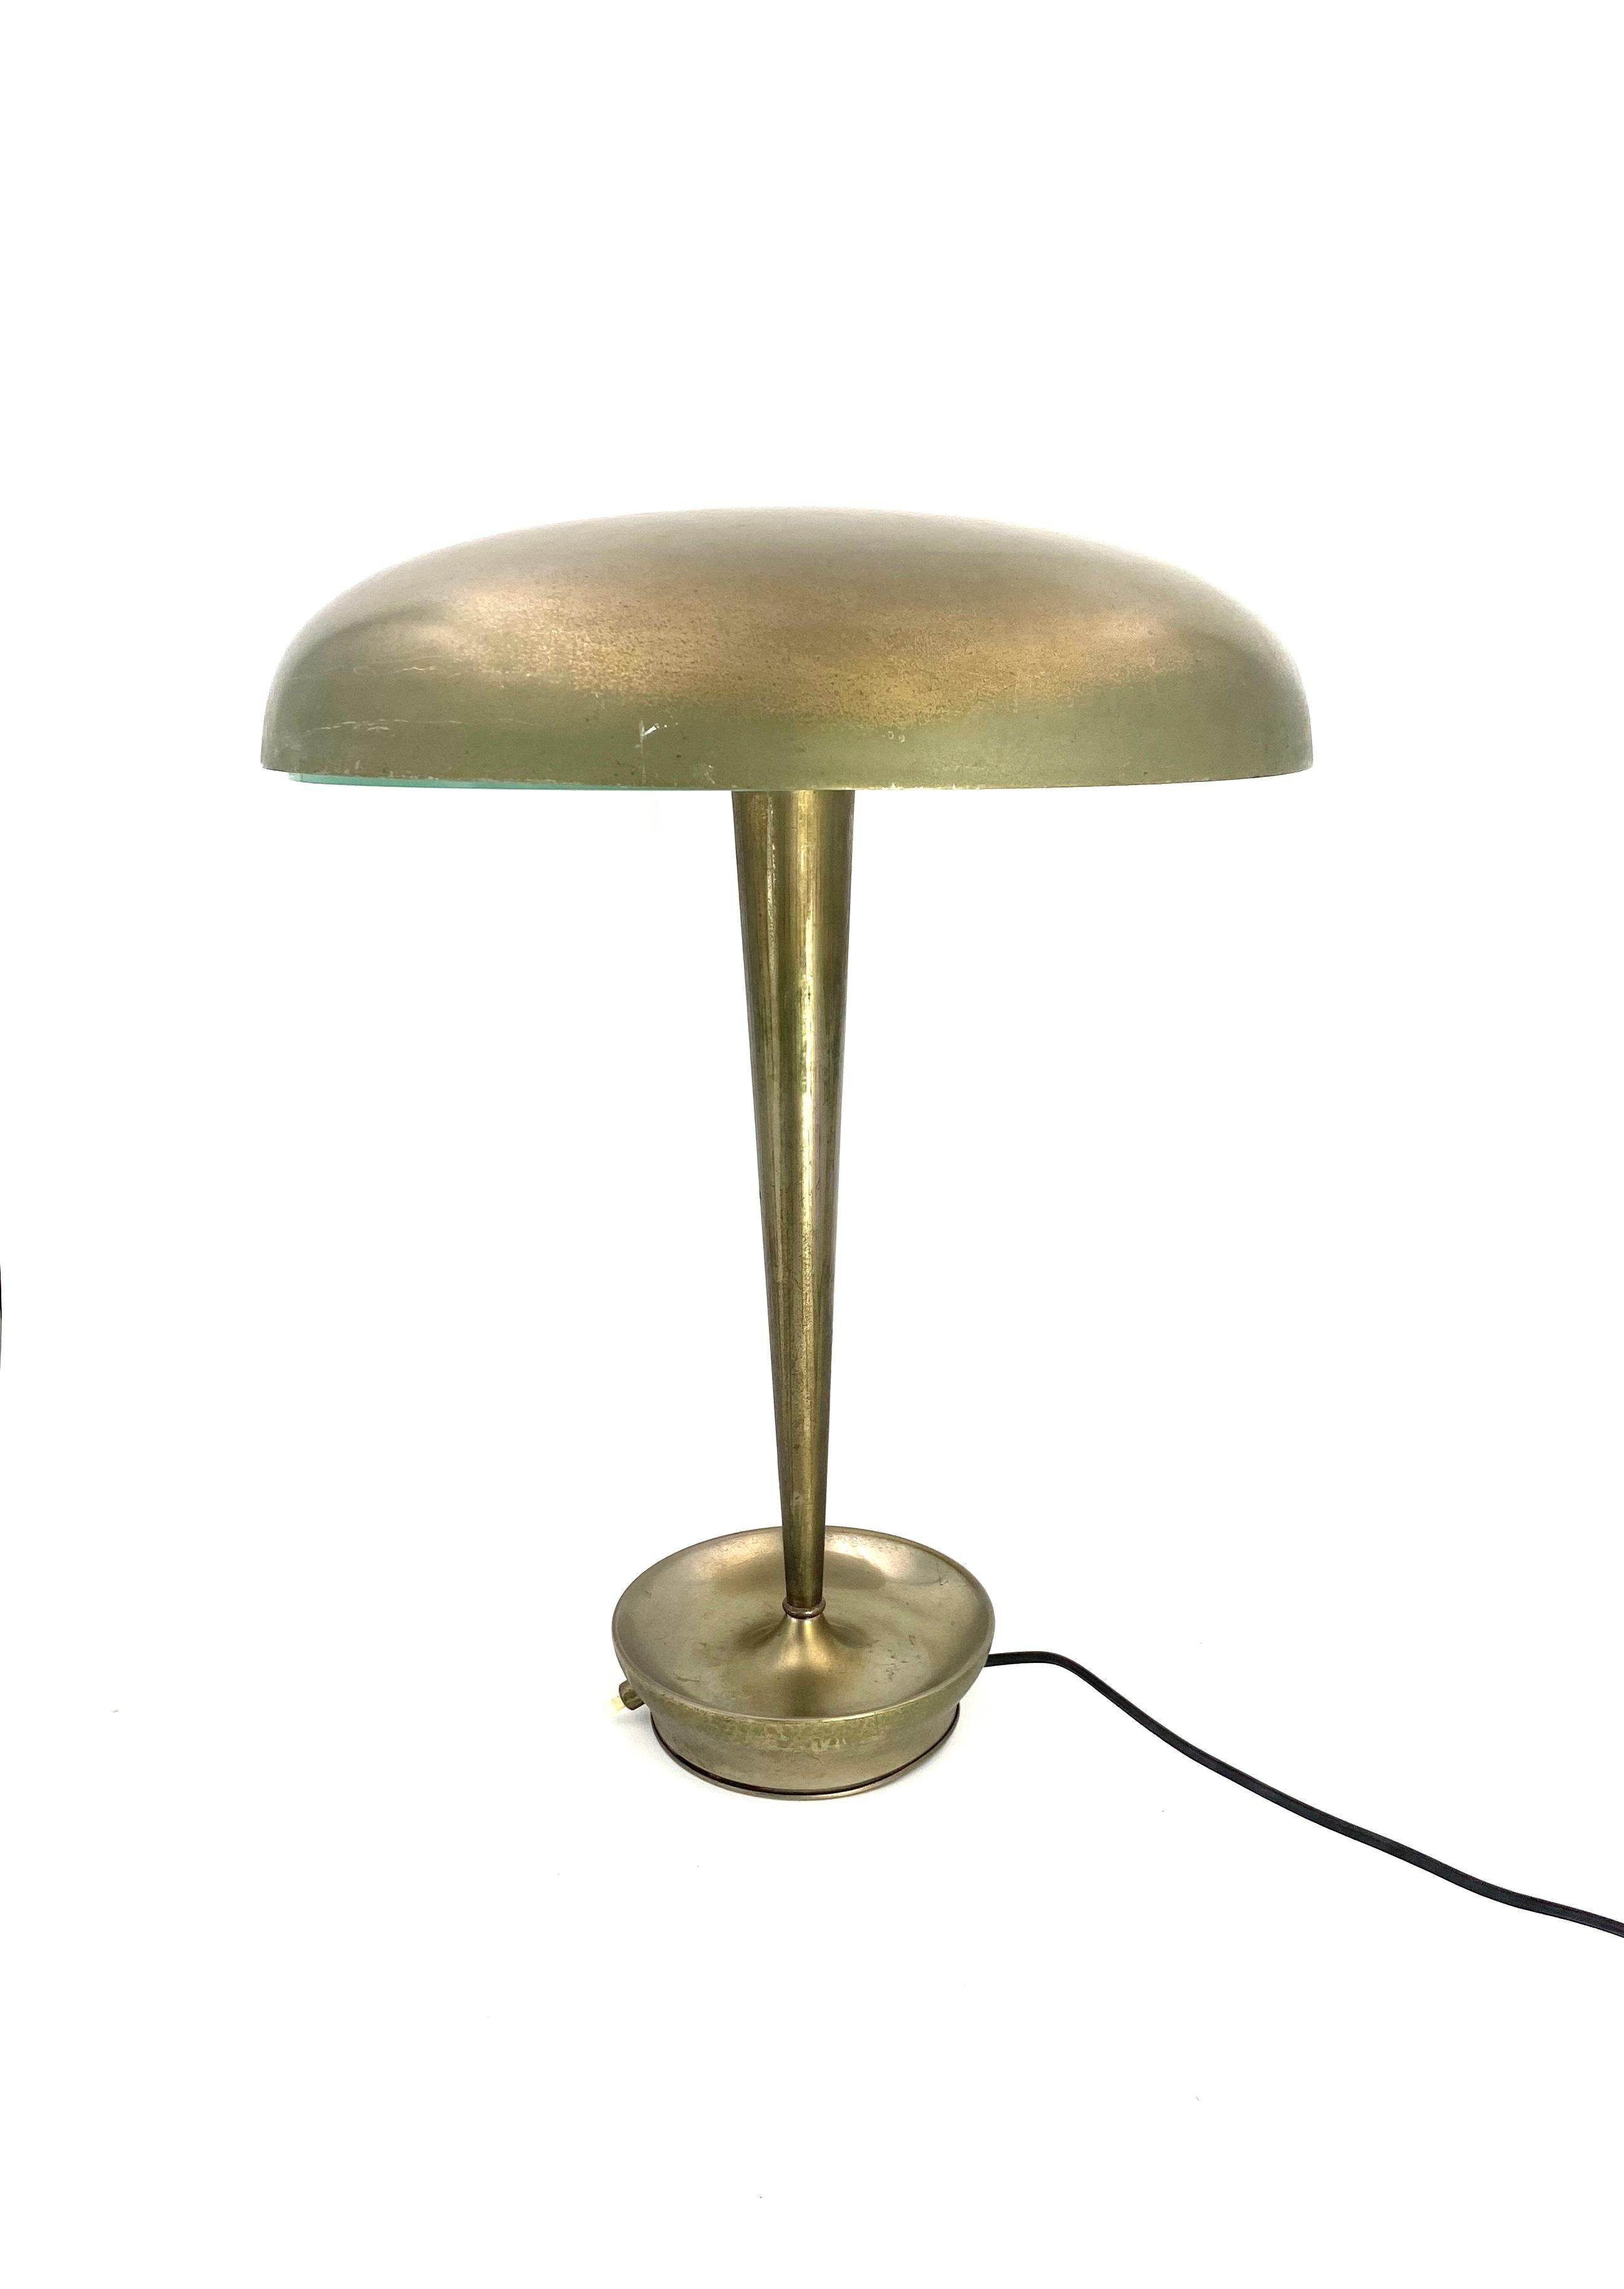 Mid-20th Century Stilnovo Desk Lamp Mod. D 4639, Stilnovo, Milan Italy, circa 1950s For Sale